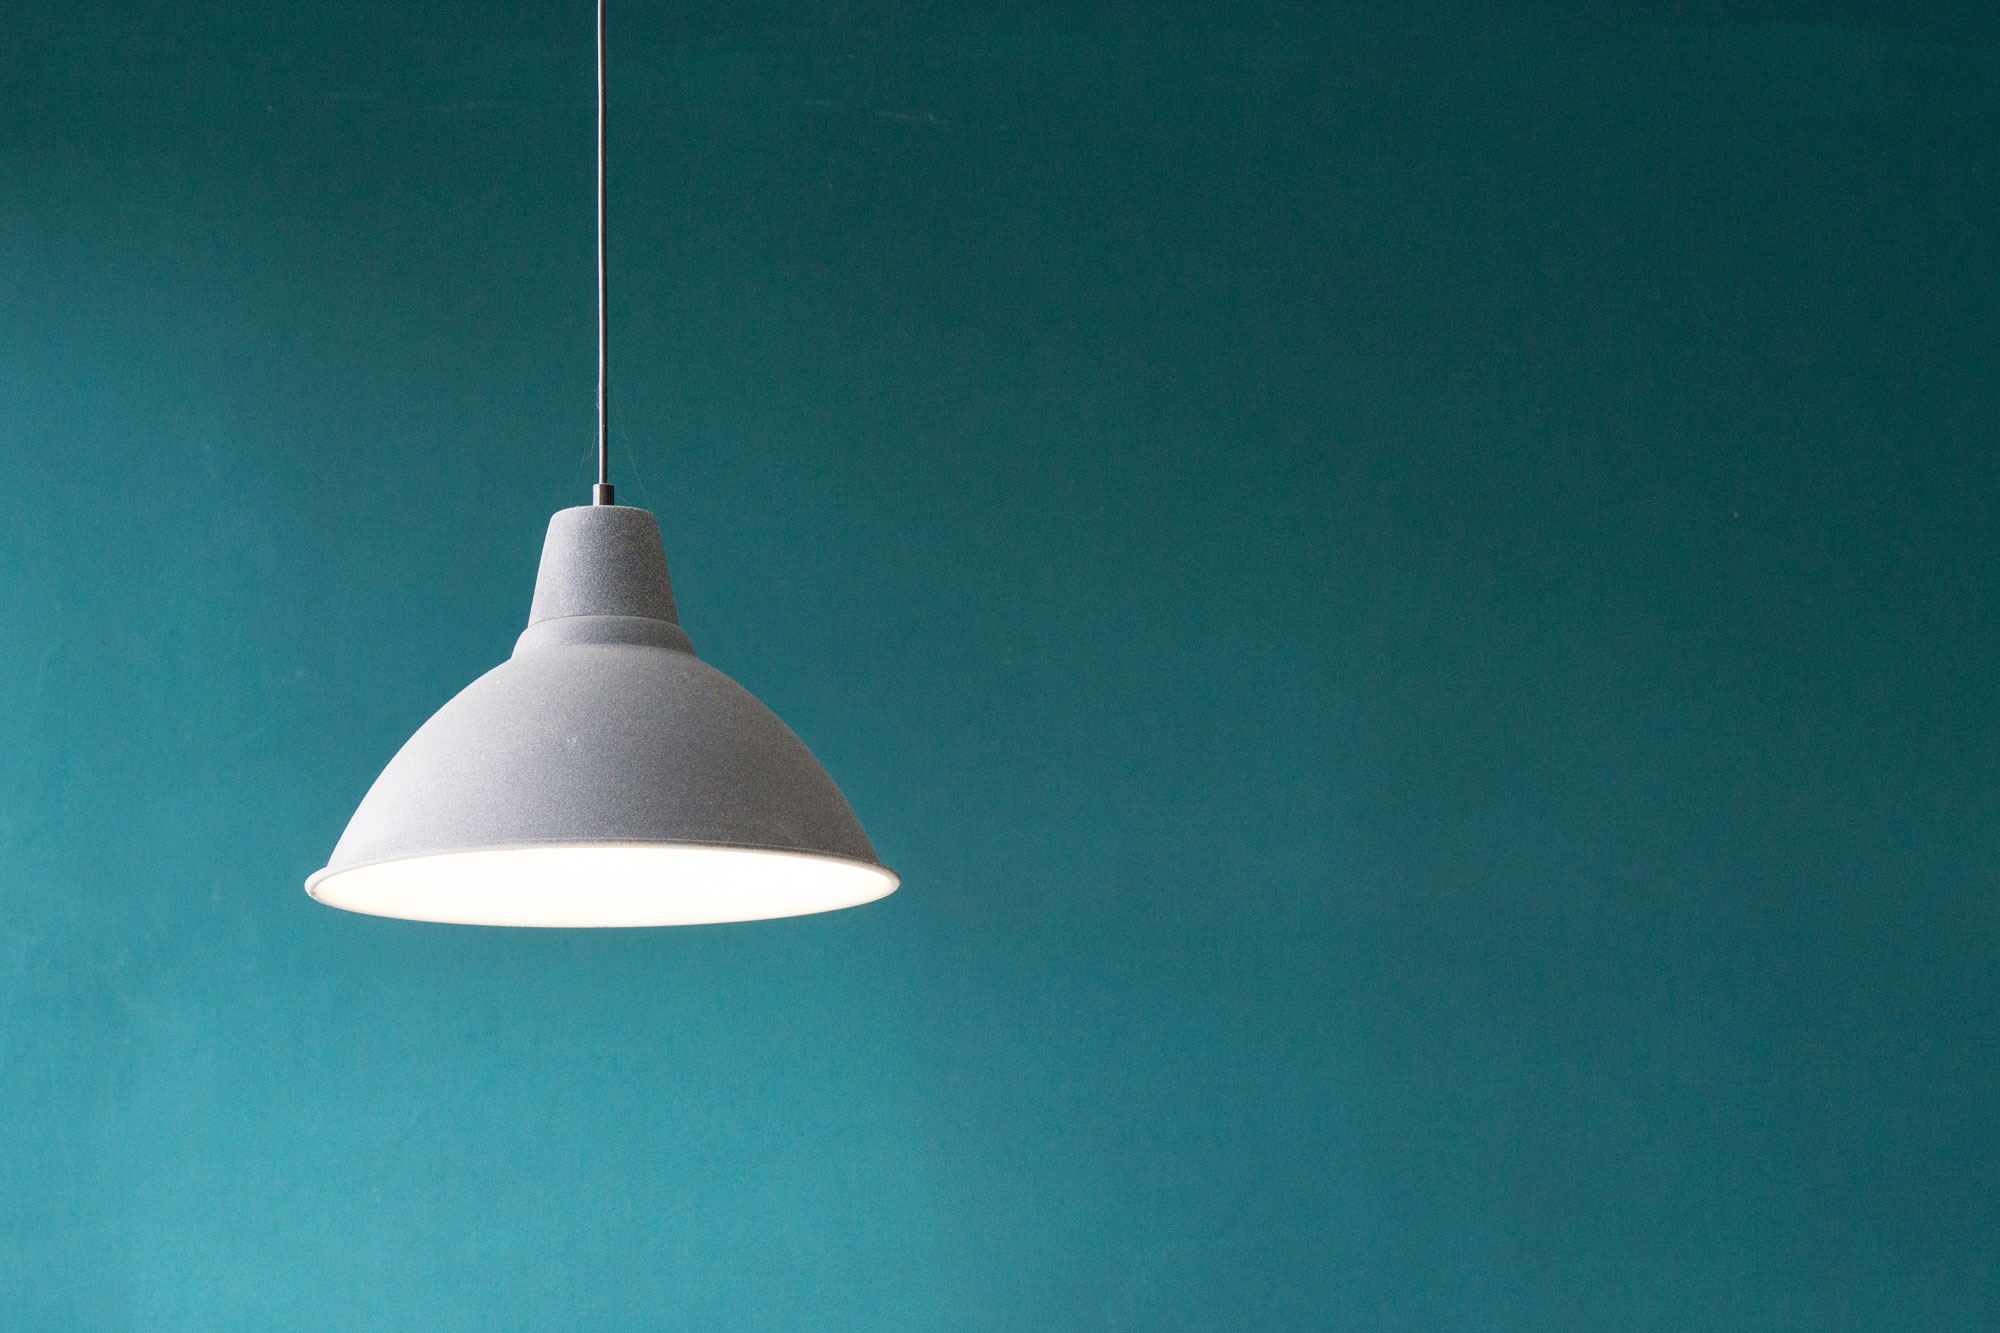 Lâmpada de LED x lâmpada fluorescente compacta: como utilizá-las corretamente